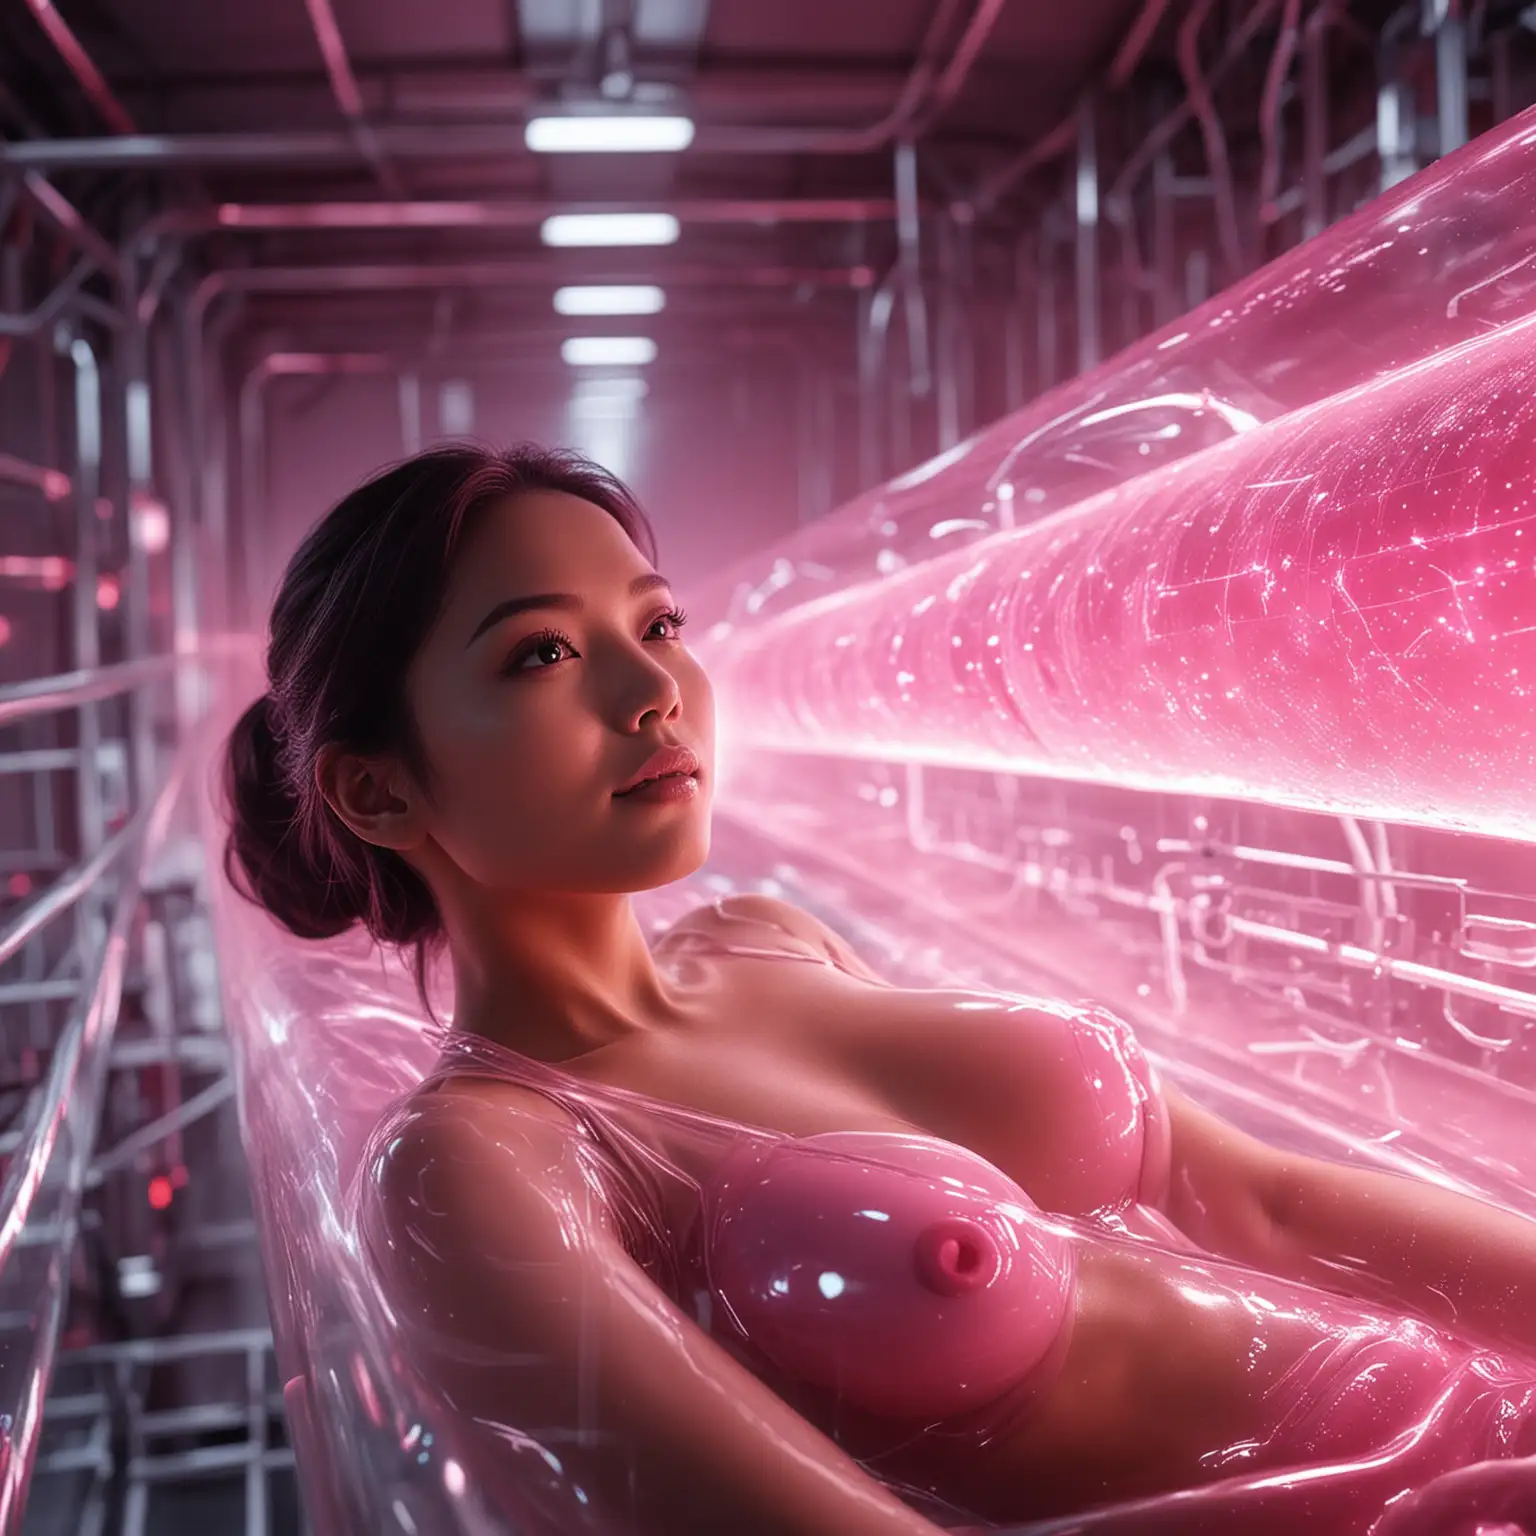 Futuristic Fusion Glowing AI Materialization in PinkTinged Laboratory